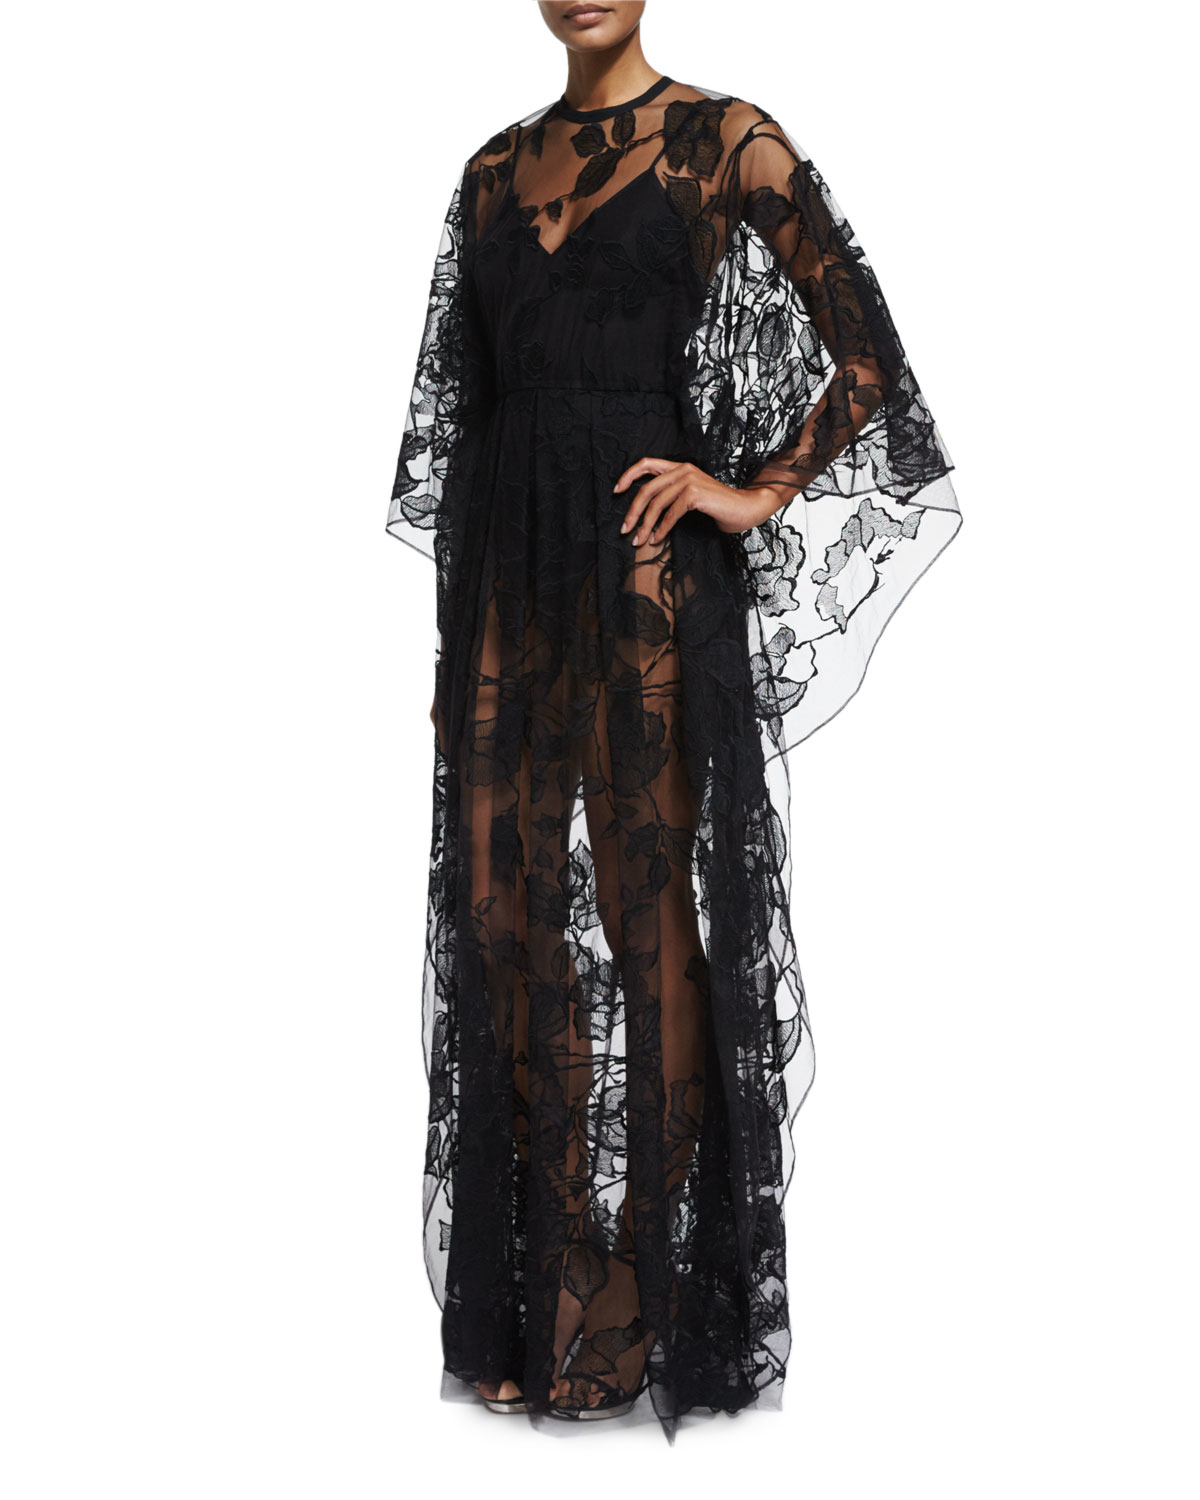 Lyst - Elie Saab Sheer Floral-lace Long-sleeve Gown in Black